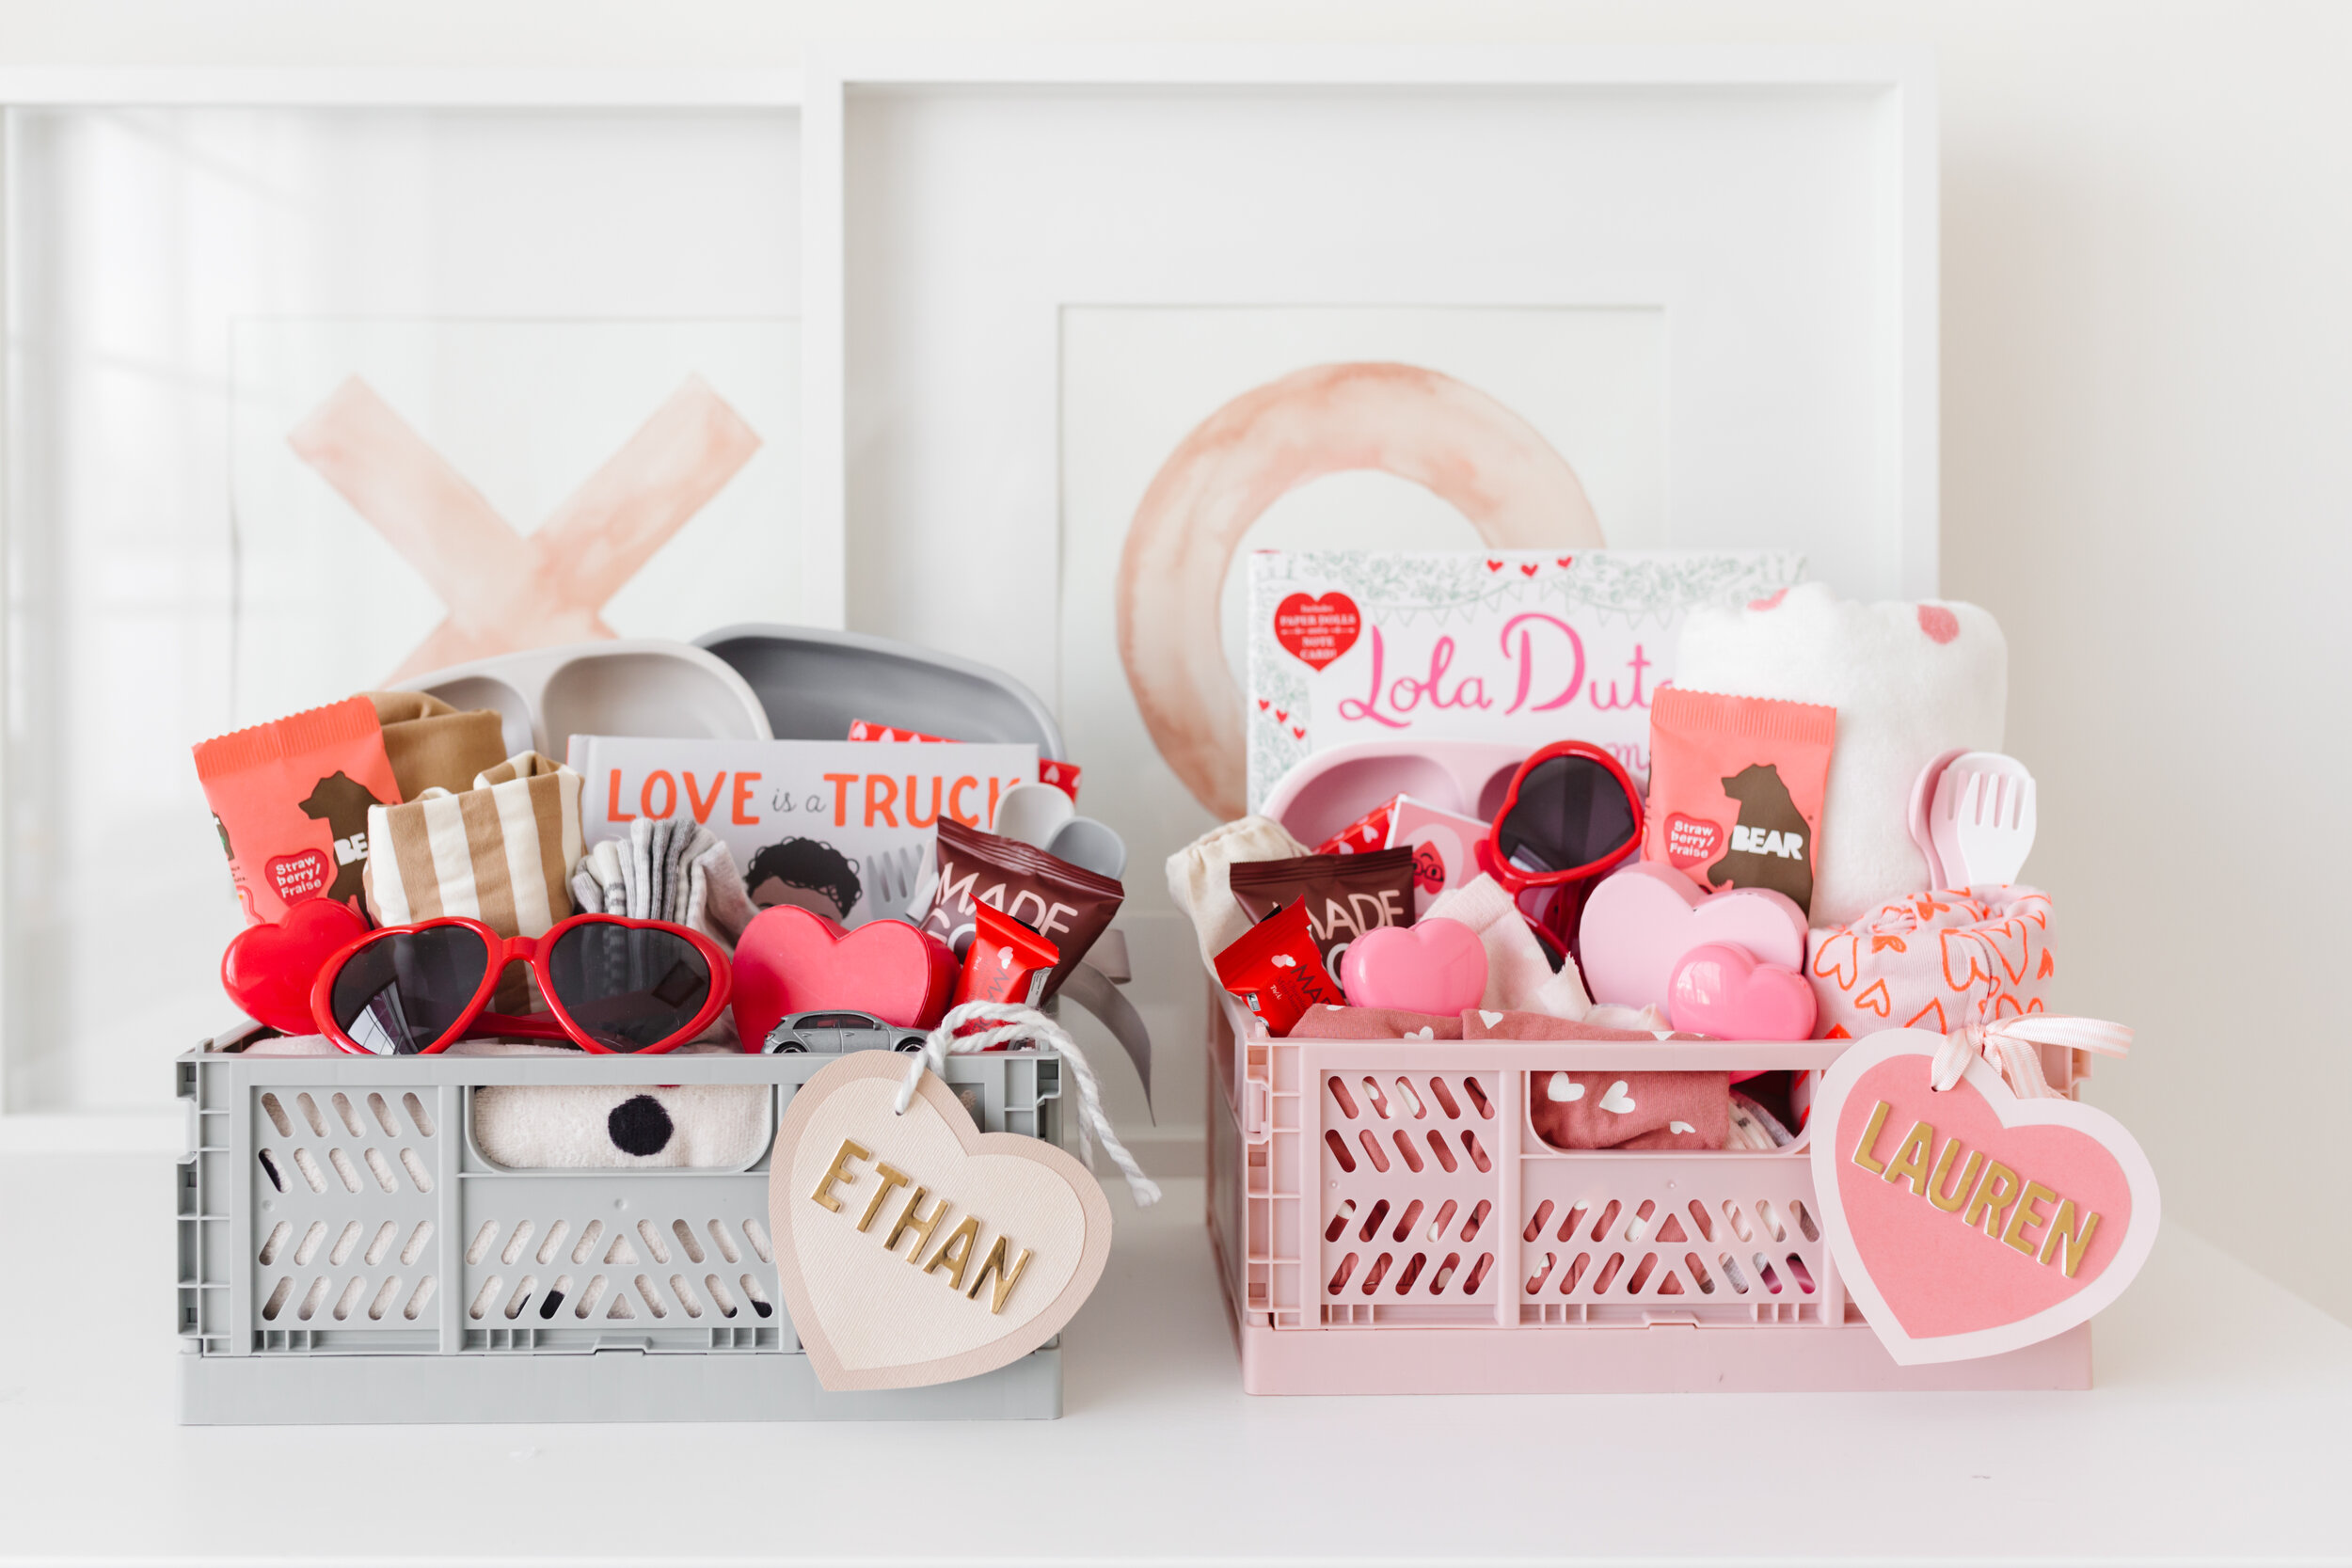 Valentine's Day Gift Ideas for Kids